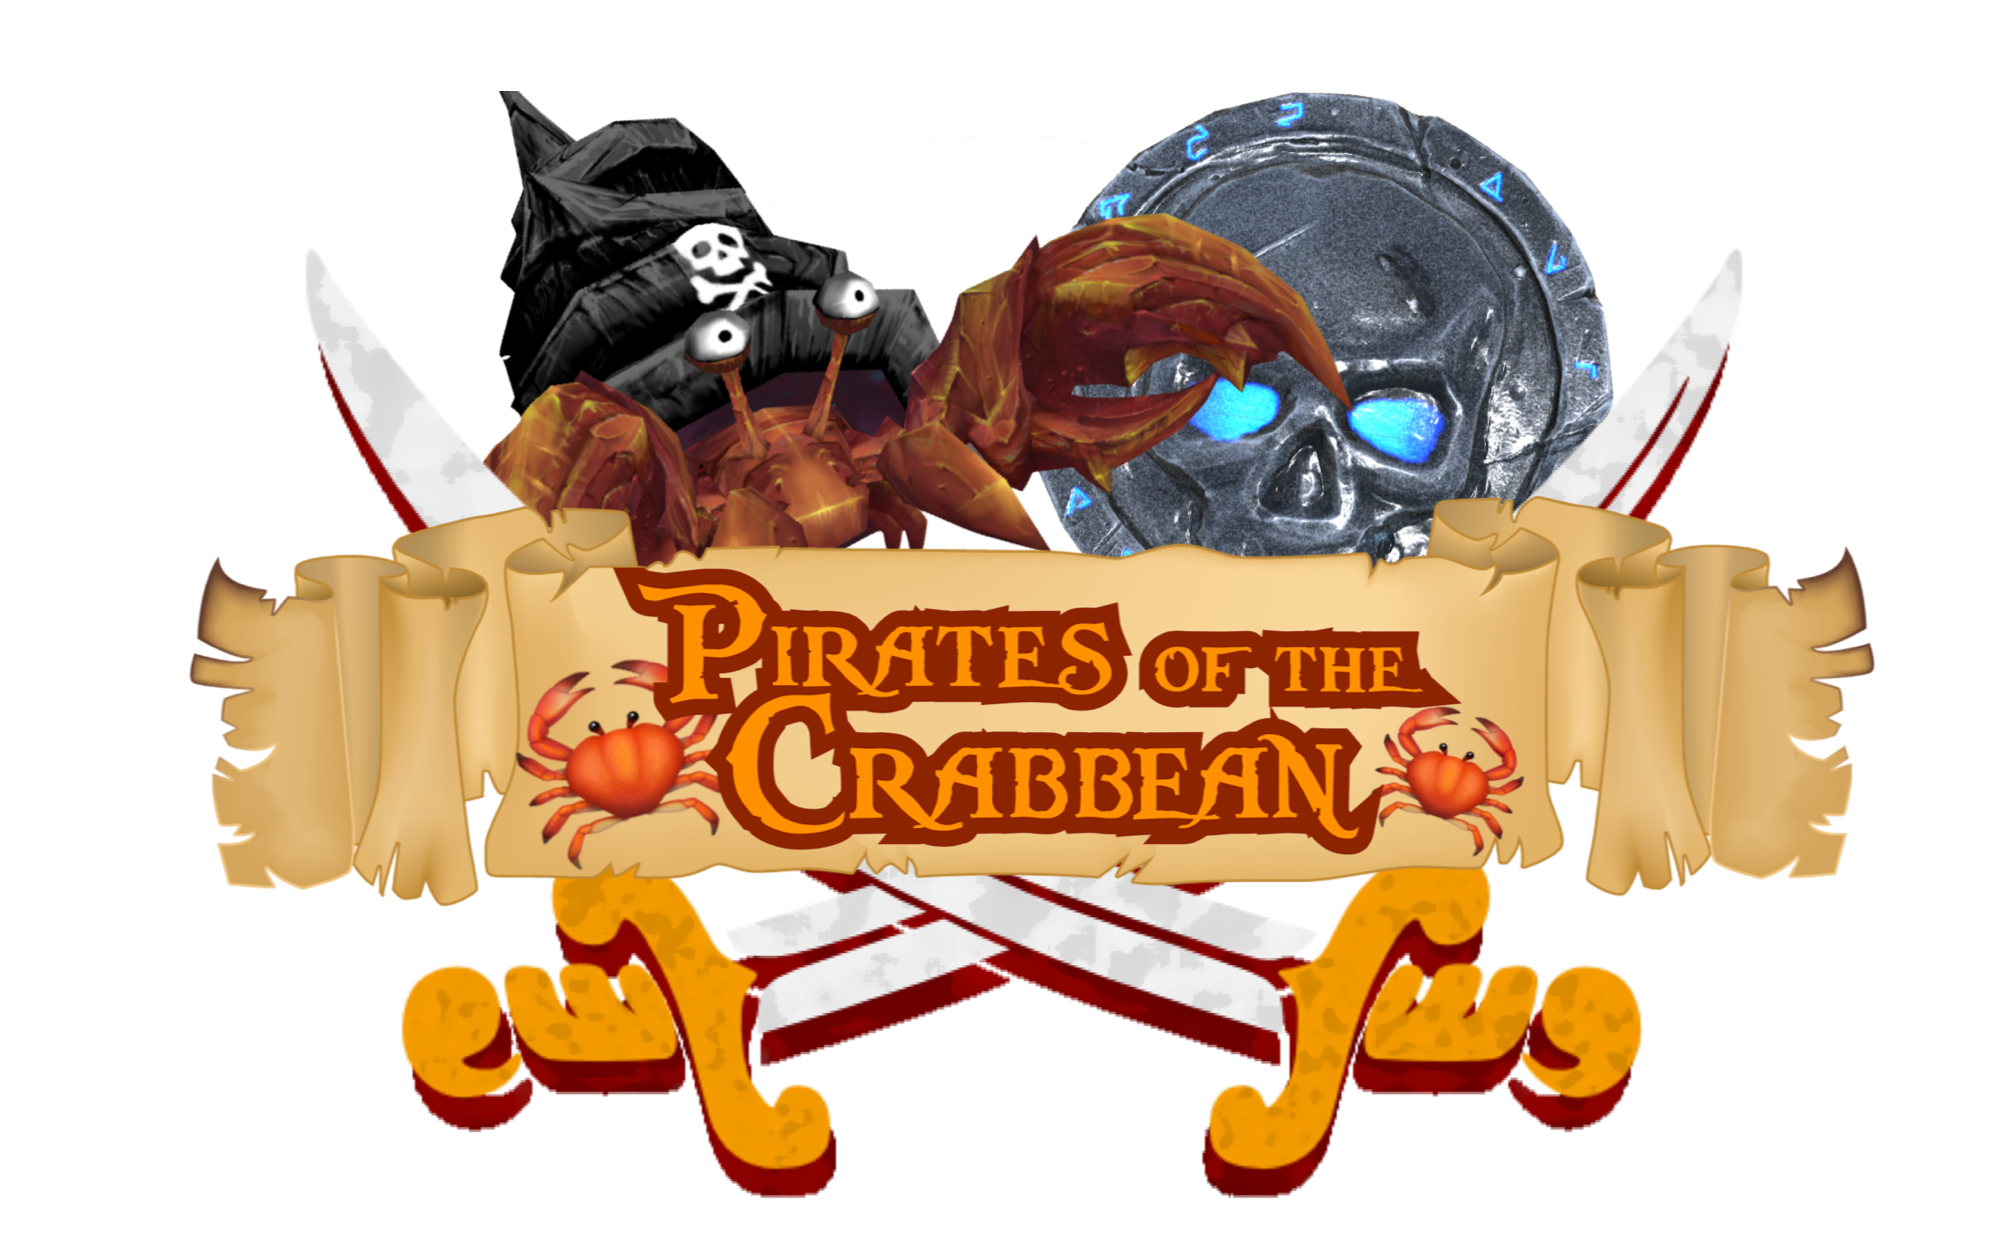 Pirates of the Crabbean